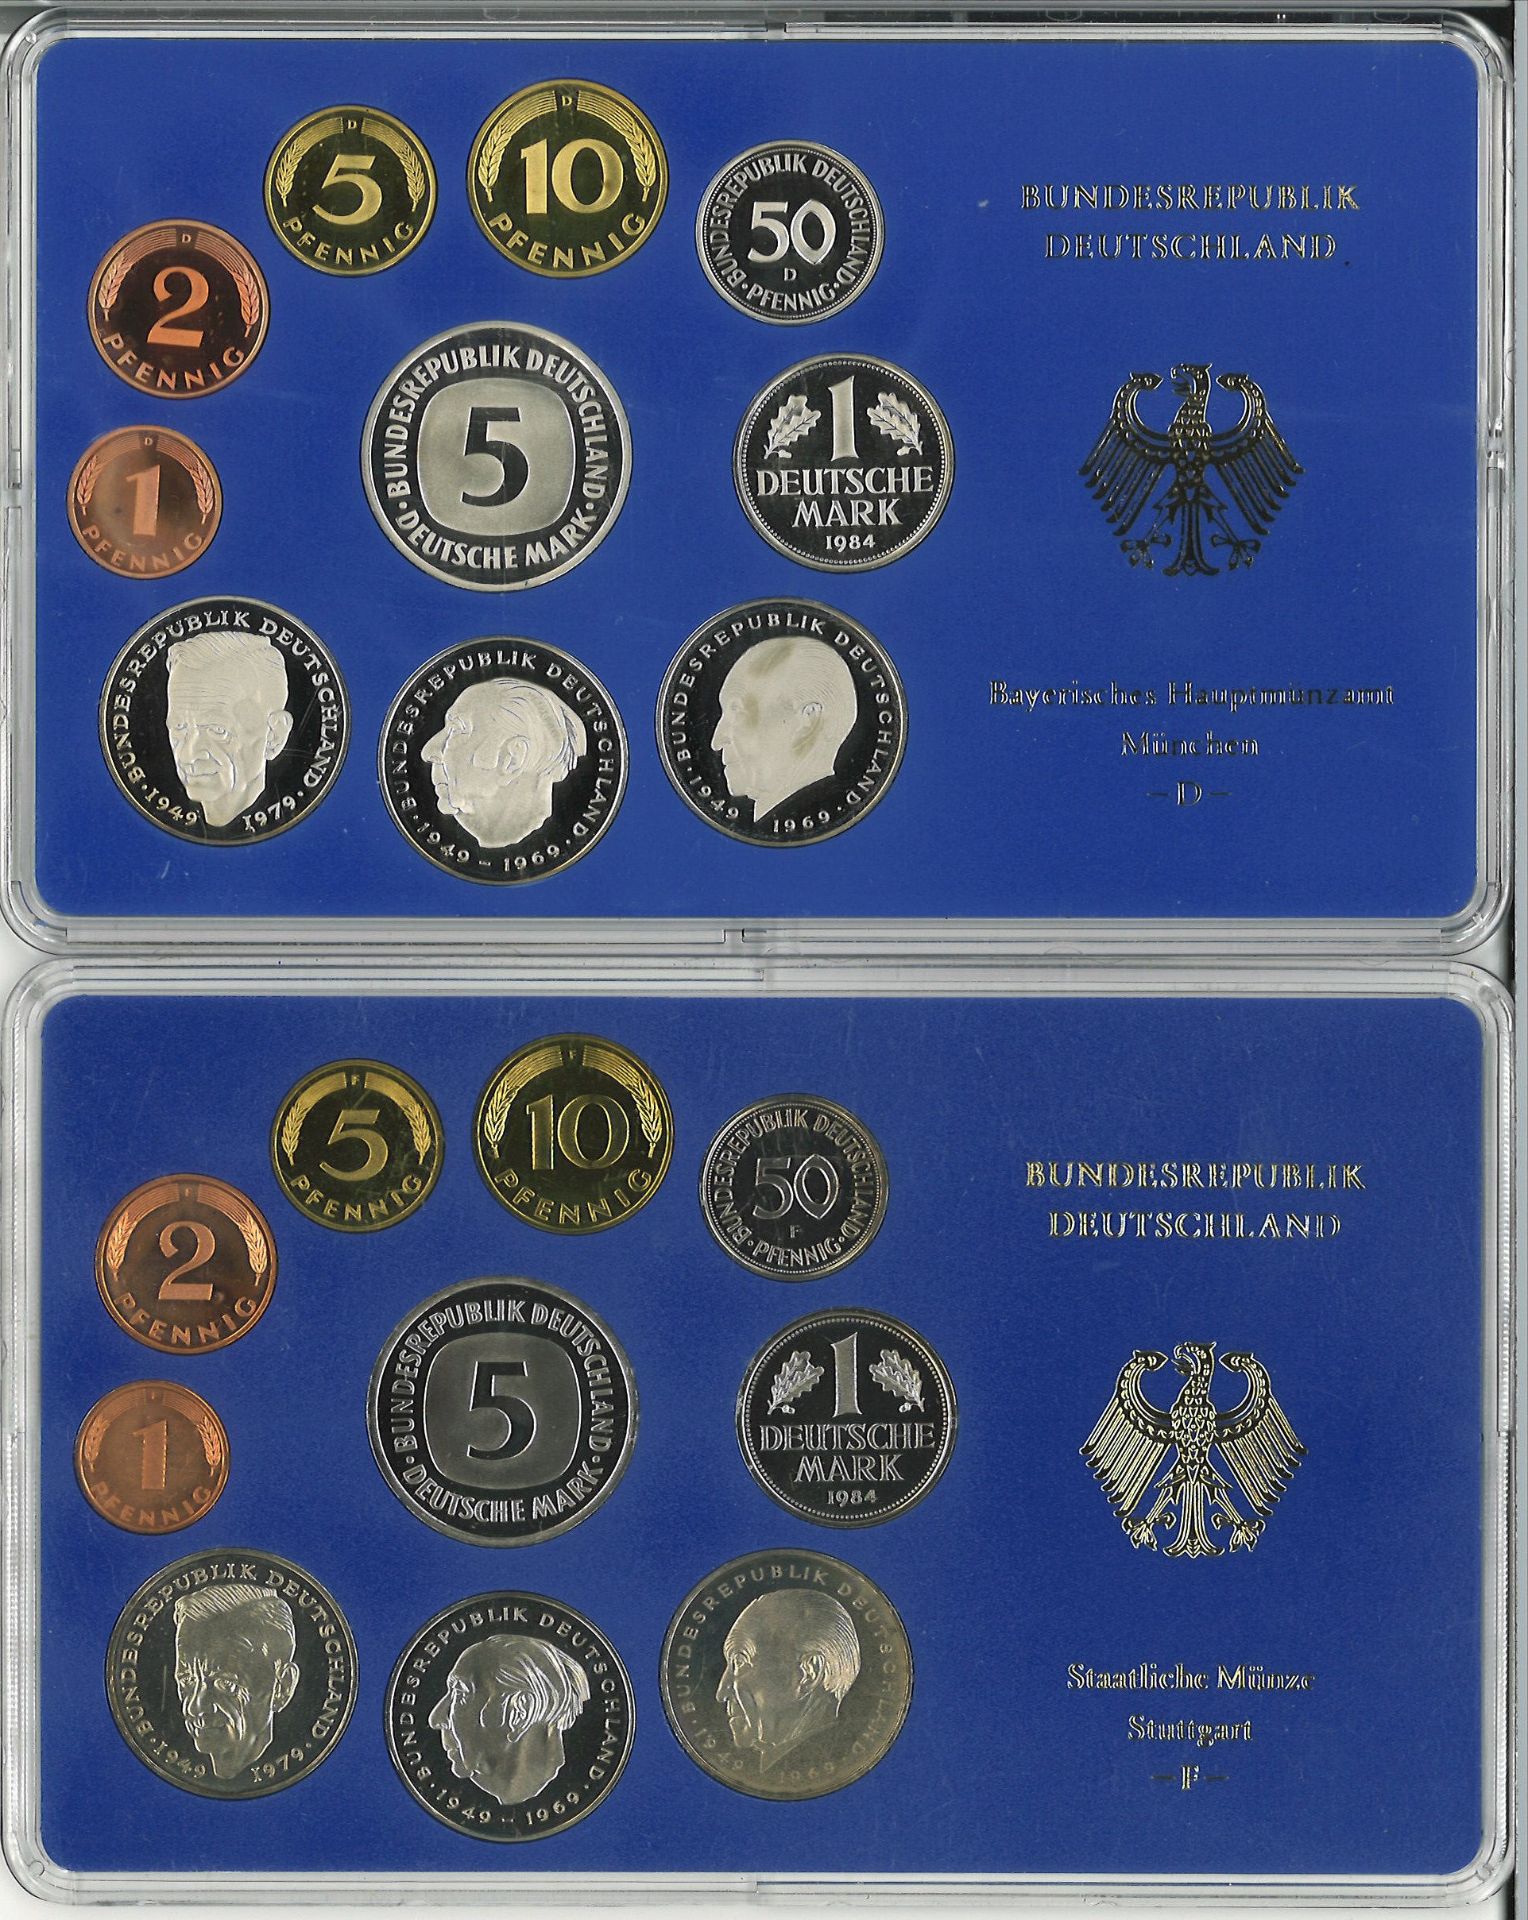 BRD Münzsets Jahrgang 1984, D, F, G und J. Im Original Blister.